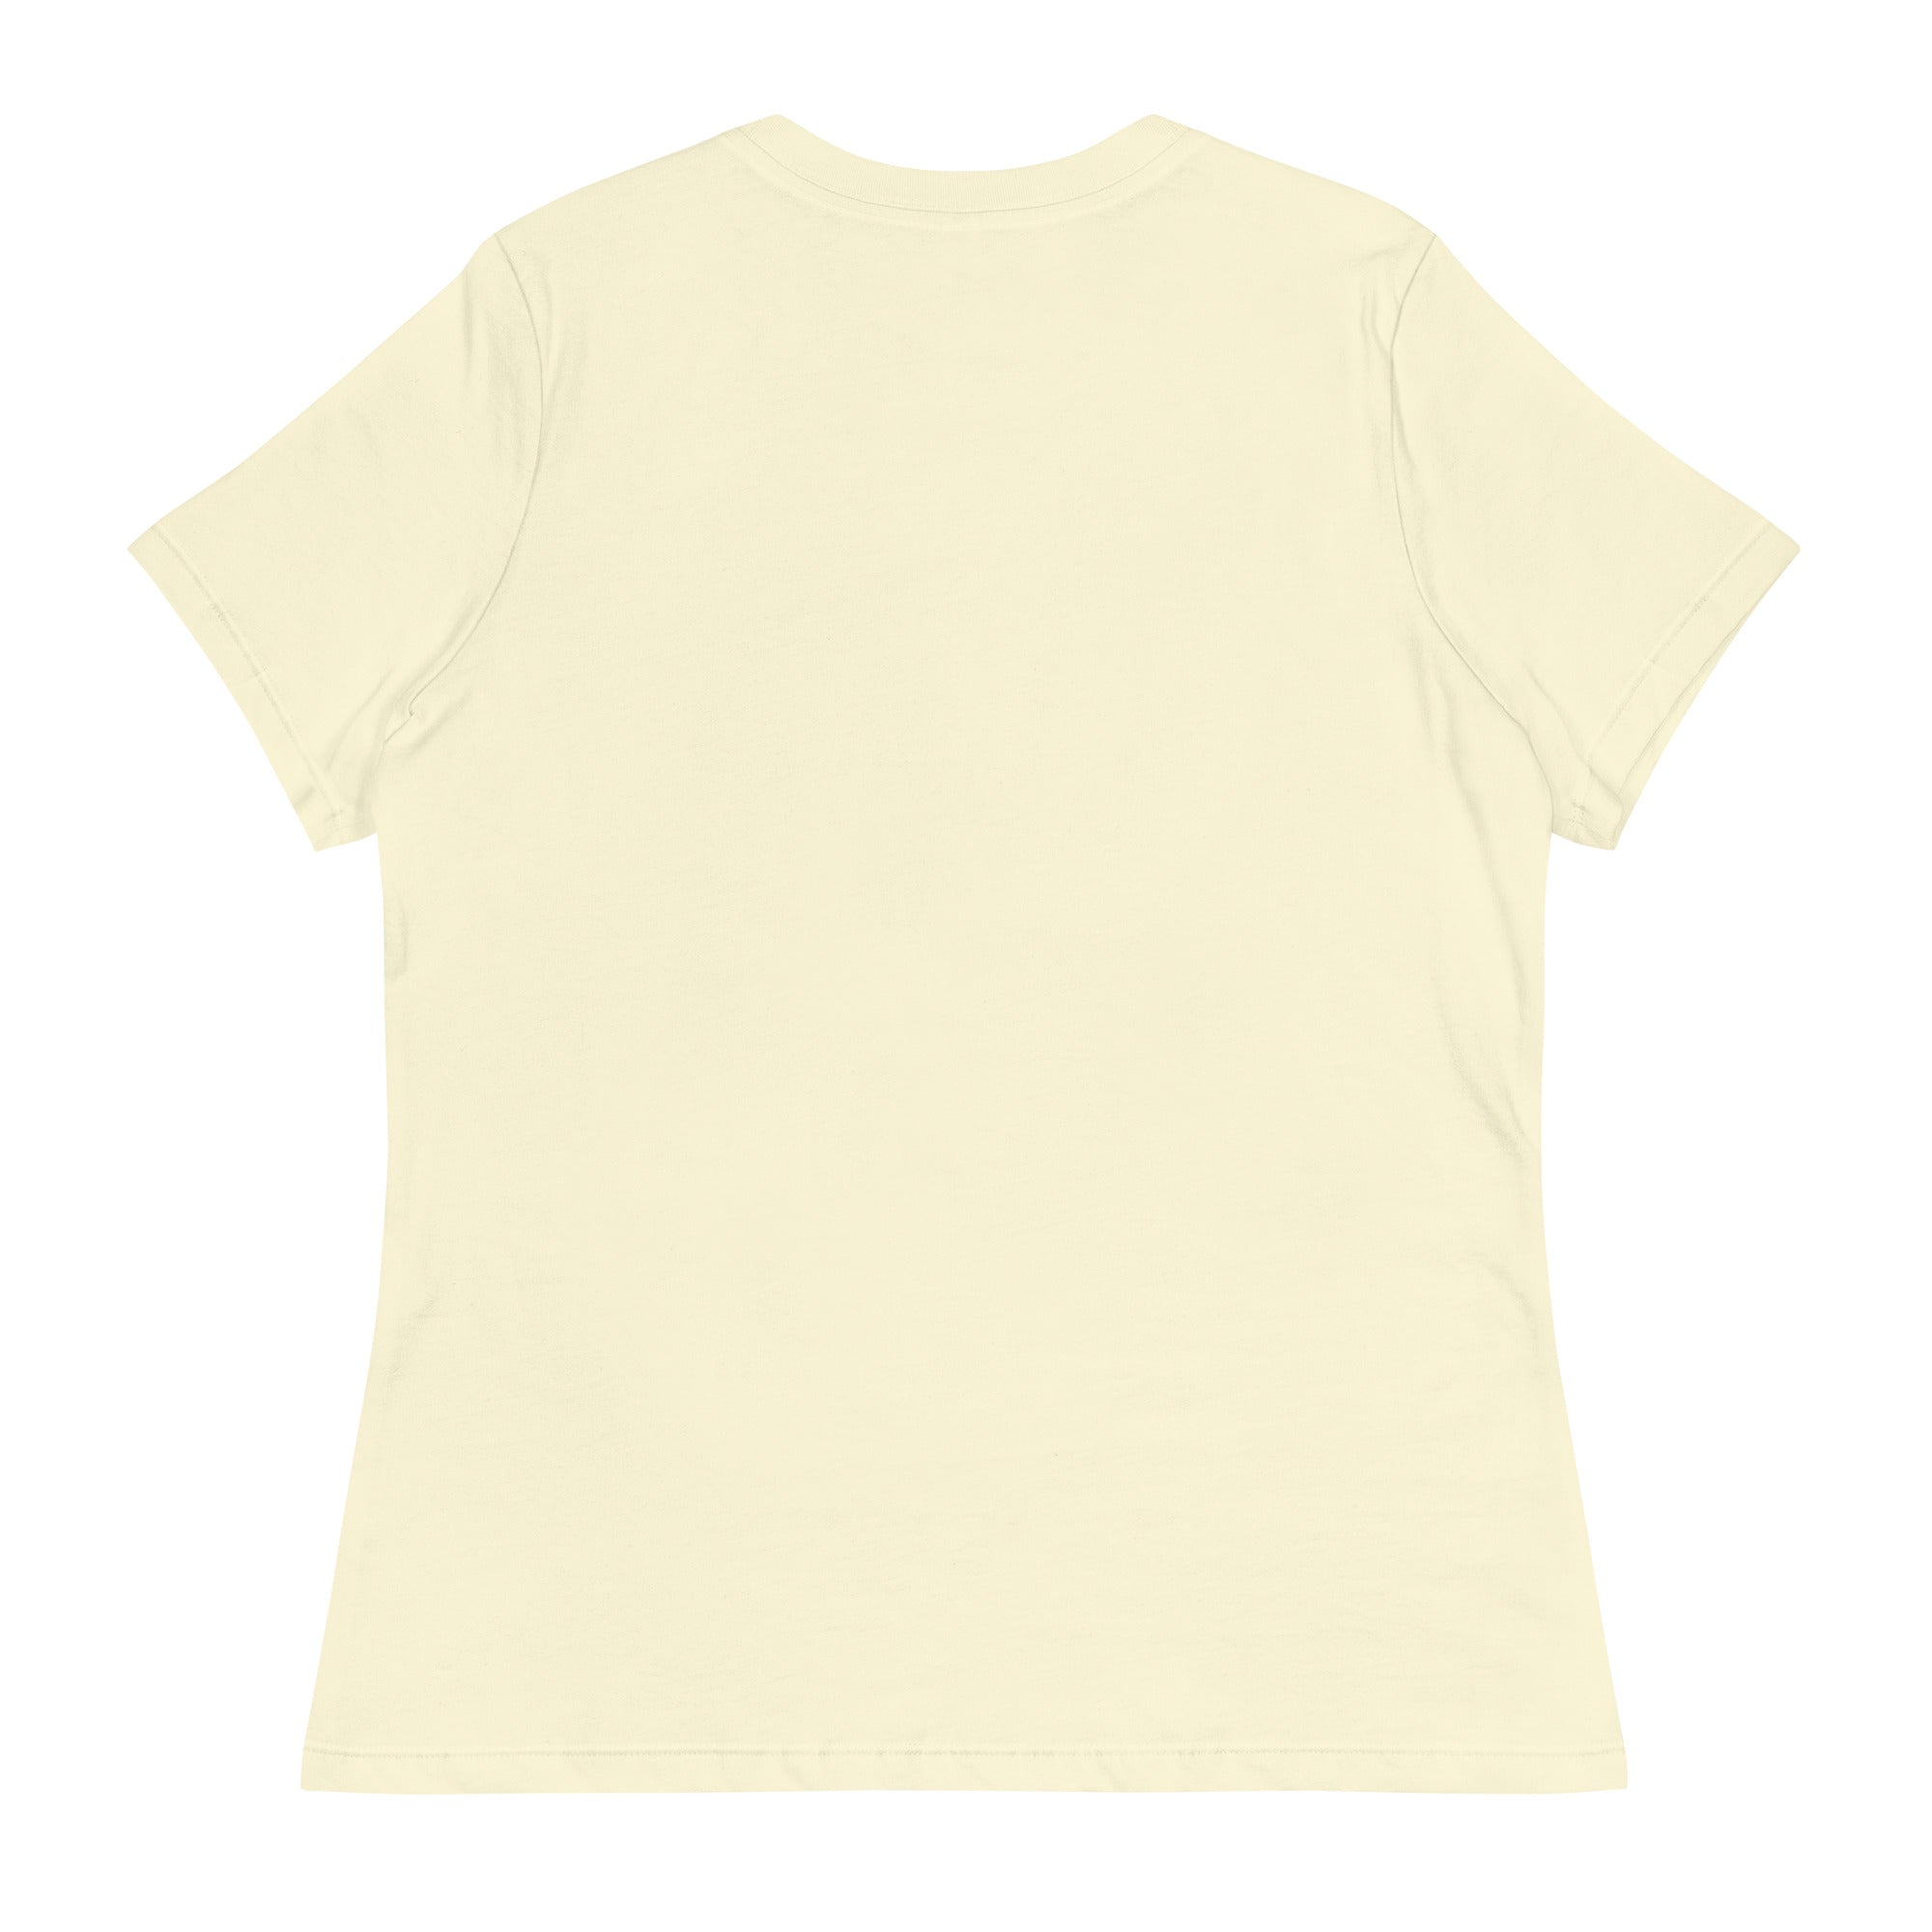 ESPRESSO - Women's Relaxed Fit Graphic T-Shirt in 16 Colors - Women's Relaxed Fit Graphic T-Shirt - DRAGON FOXX™ - 7218598_14253 - Citron - S - Athletic Heather T-shirt - Berry T-shirt - Black T-shirt